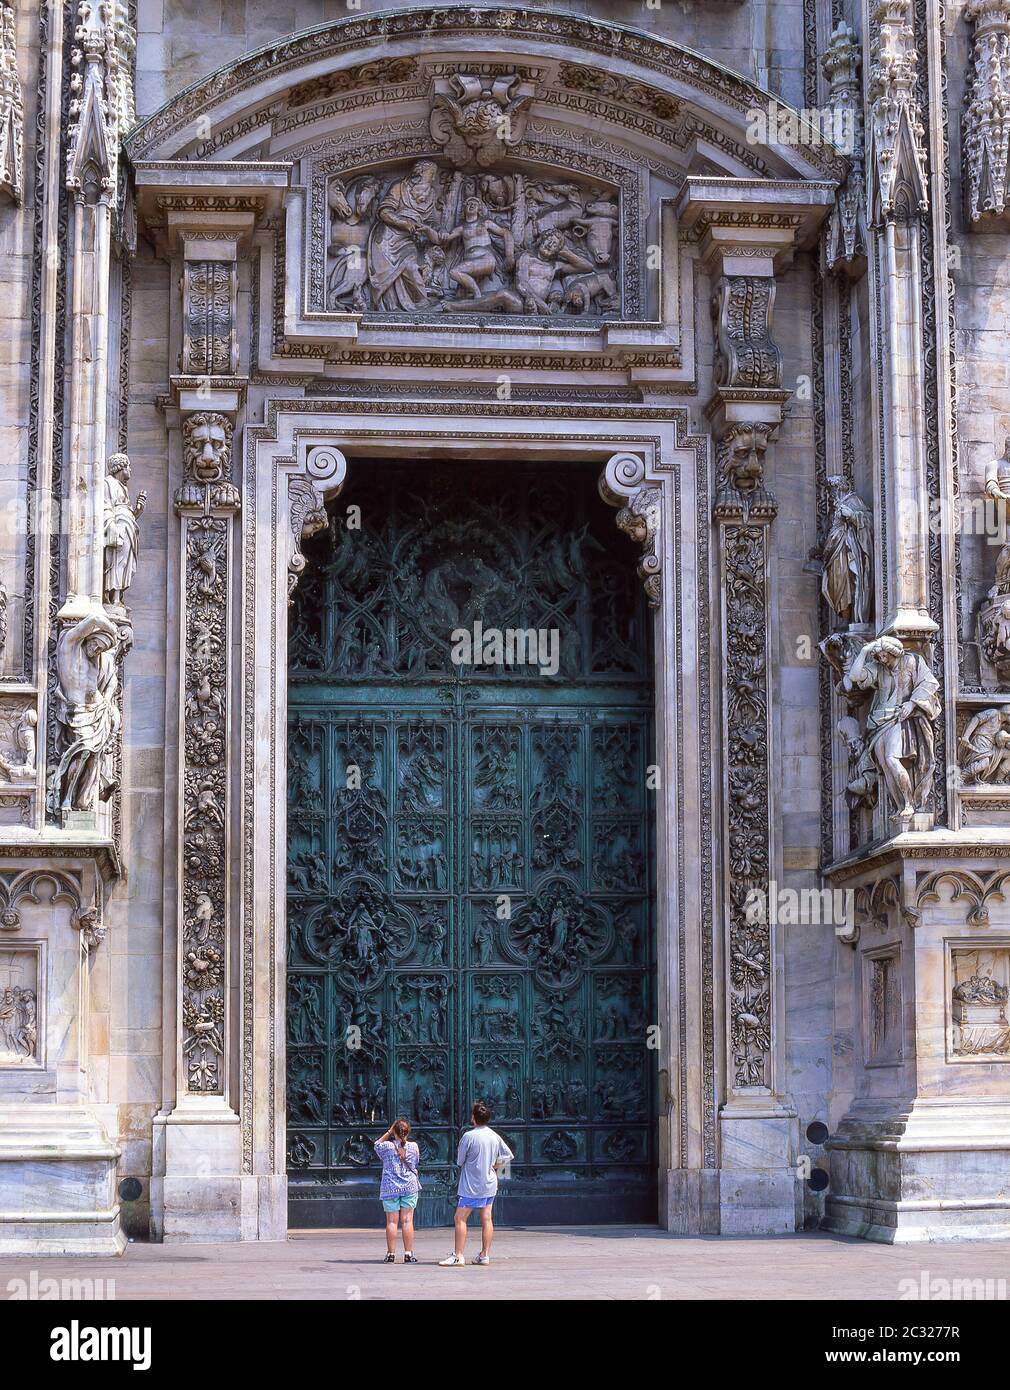 Bronze central door on facade of Duomo di Milano (Milan Cathedral), Piazza del Duomo, Milano (Milan), Lombardy Region, Italy Stock Photo